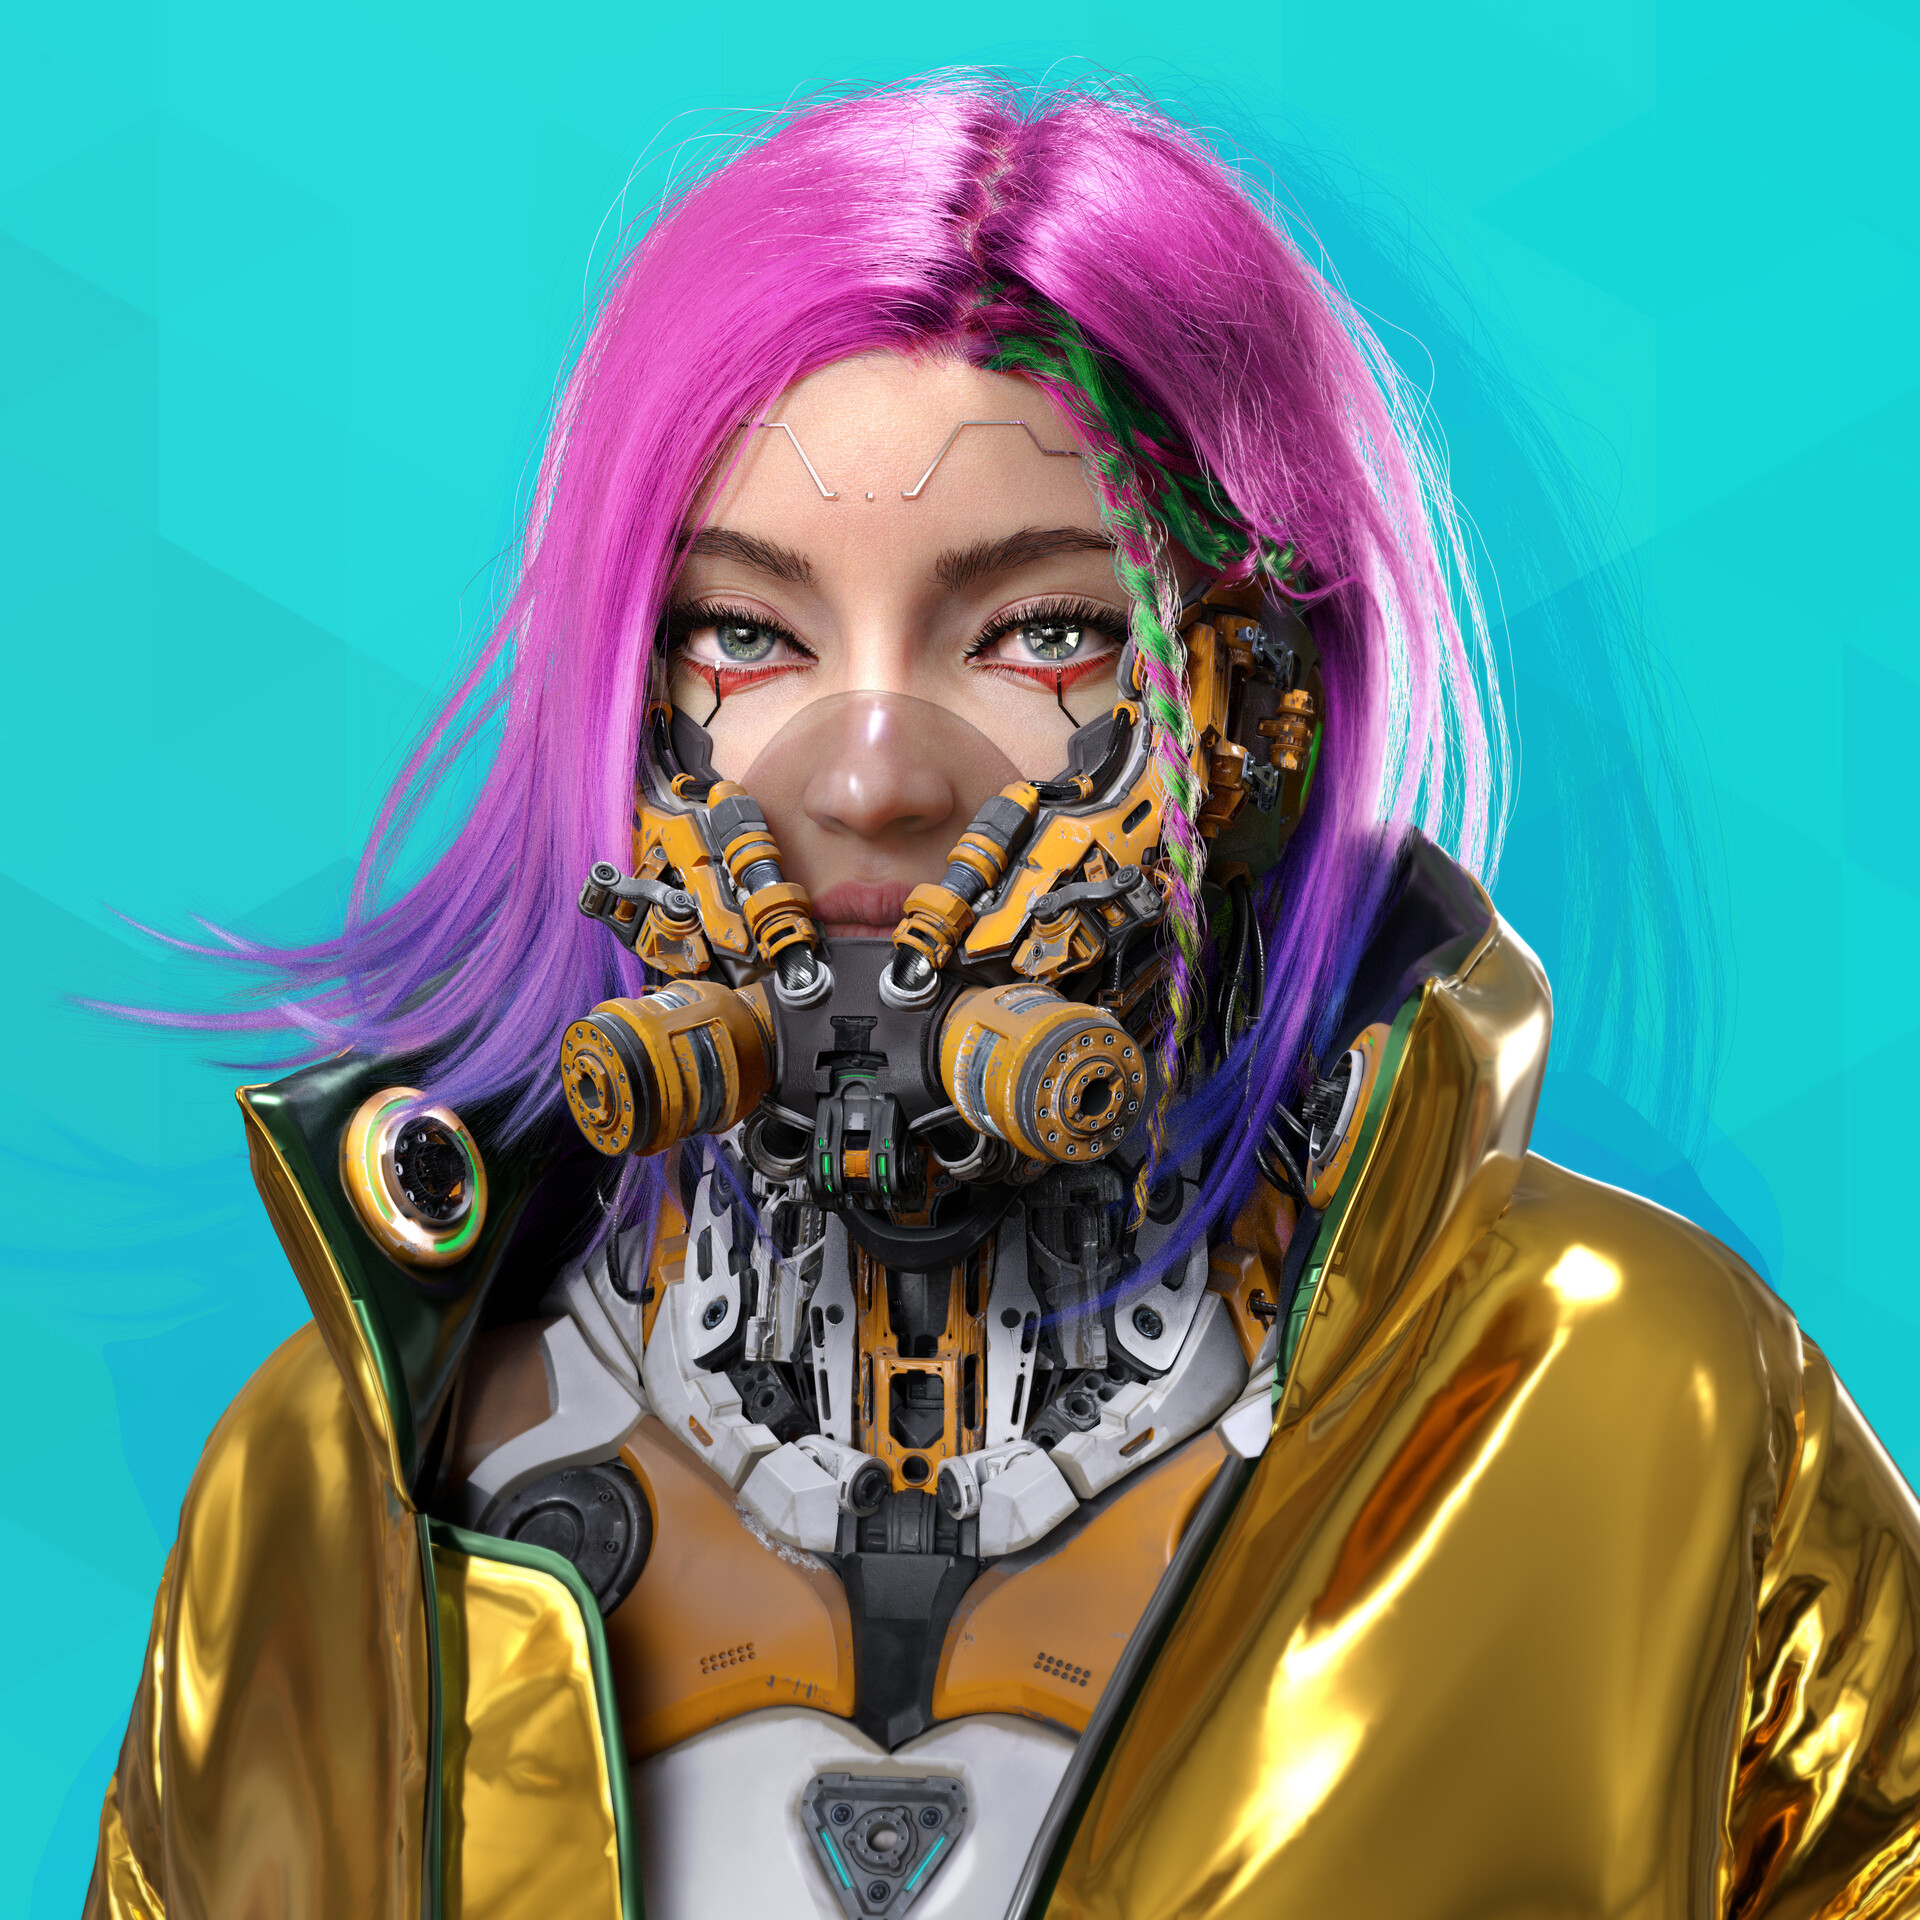 Digital Art Artwork Illustration Women Cyberpunk Science Fiction Portrait Gas Masks Mask Pink Hair T 1920x1920